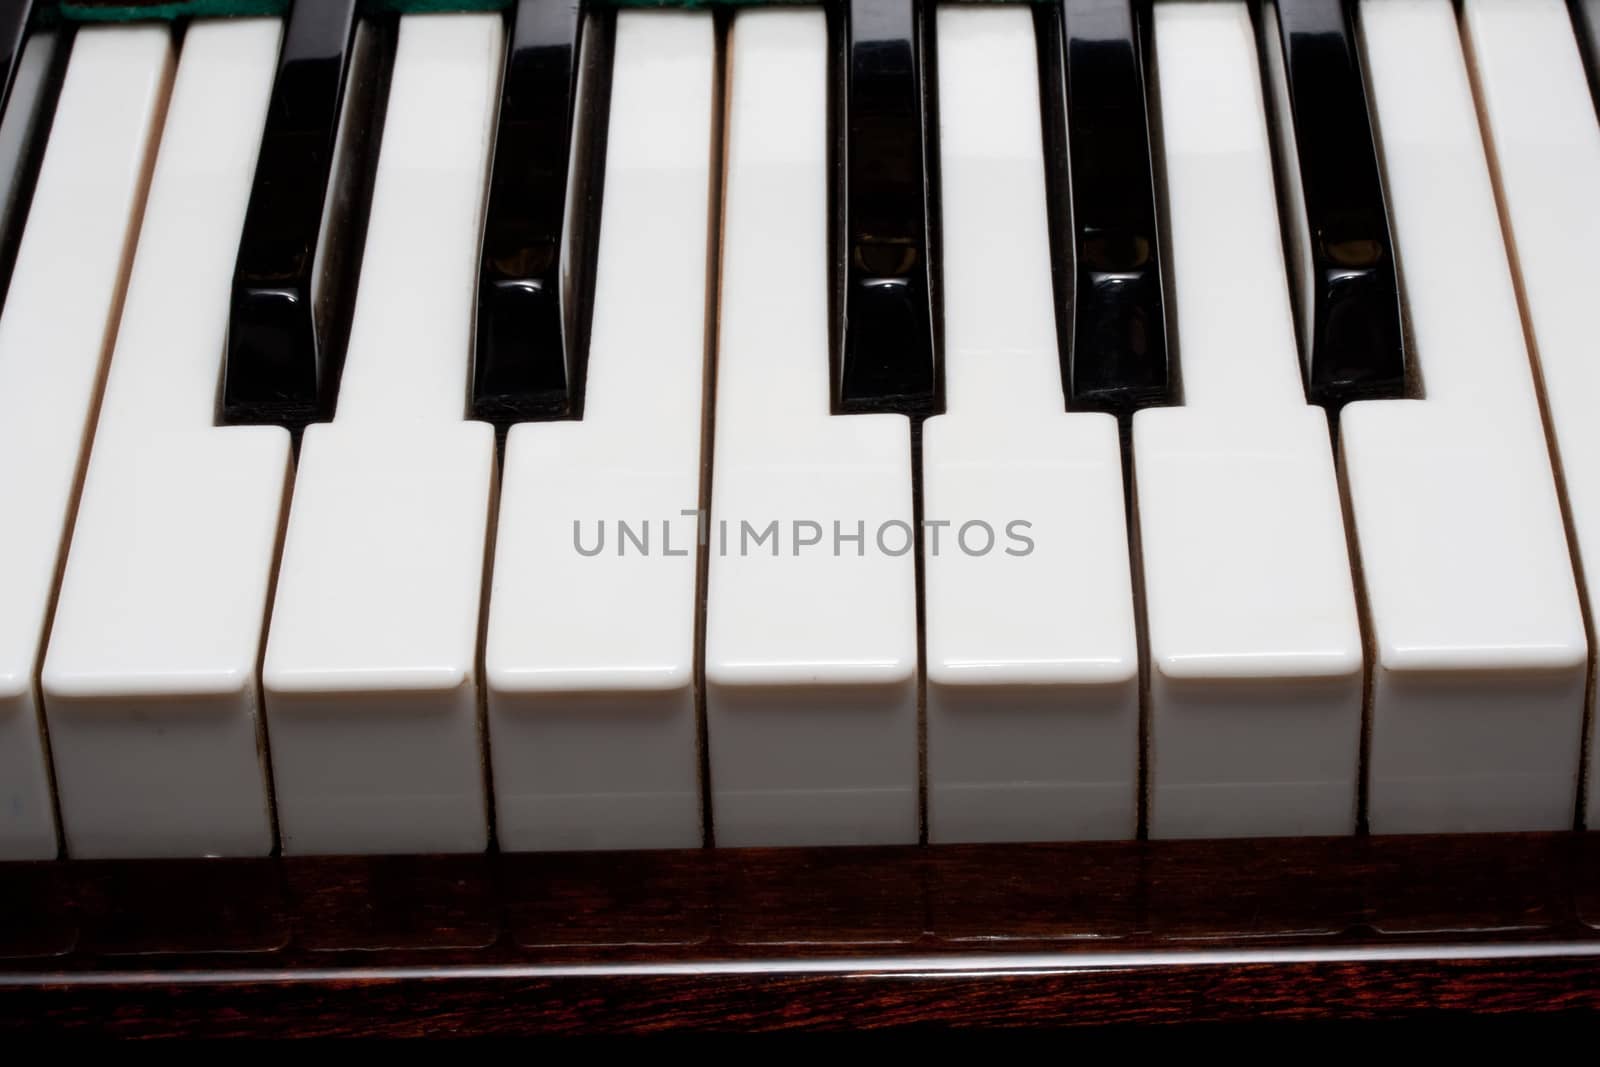 Beautiful close up photo of piano keys